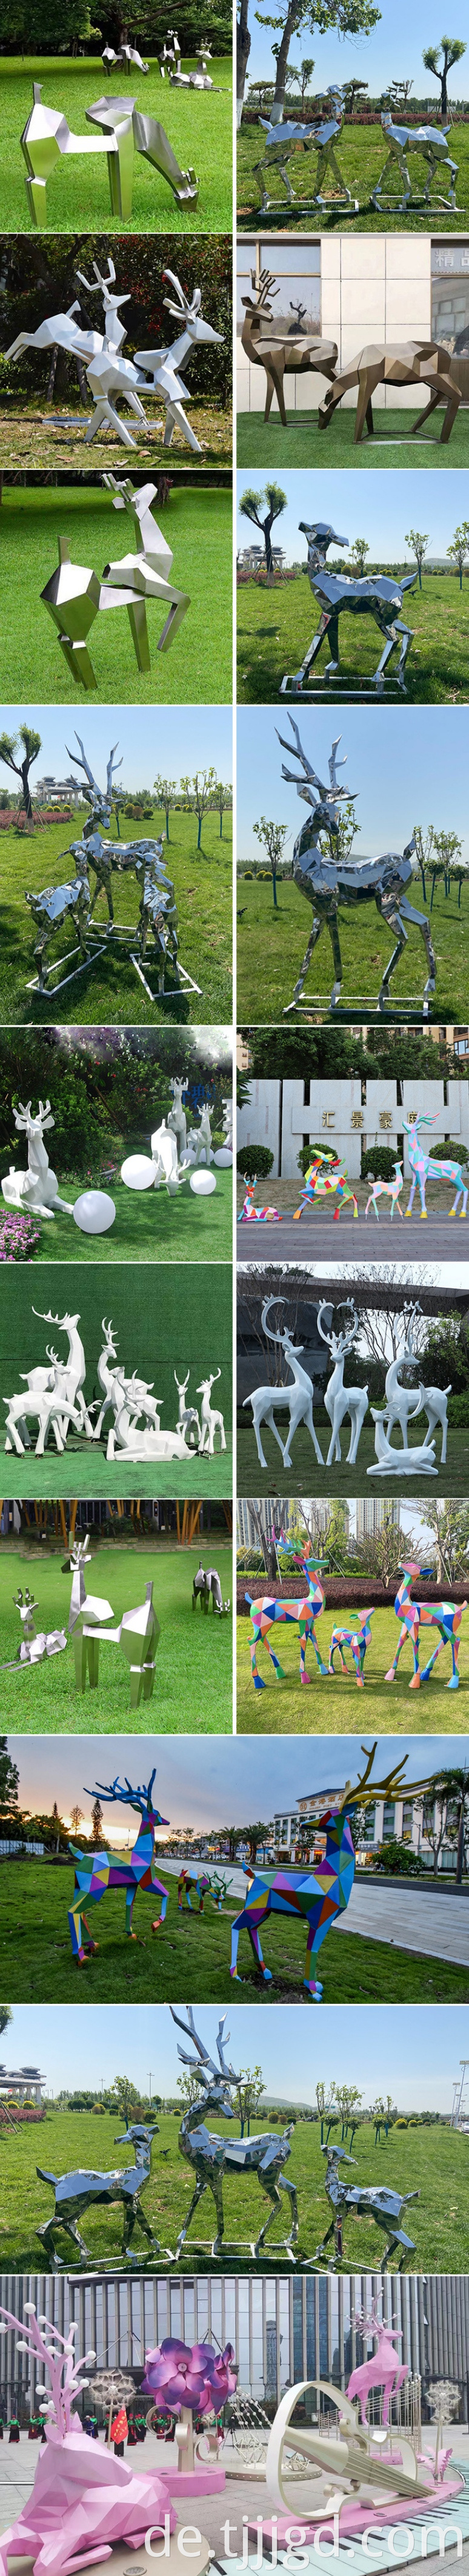 Large Outdoor Deer Statues